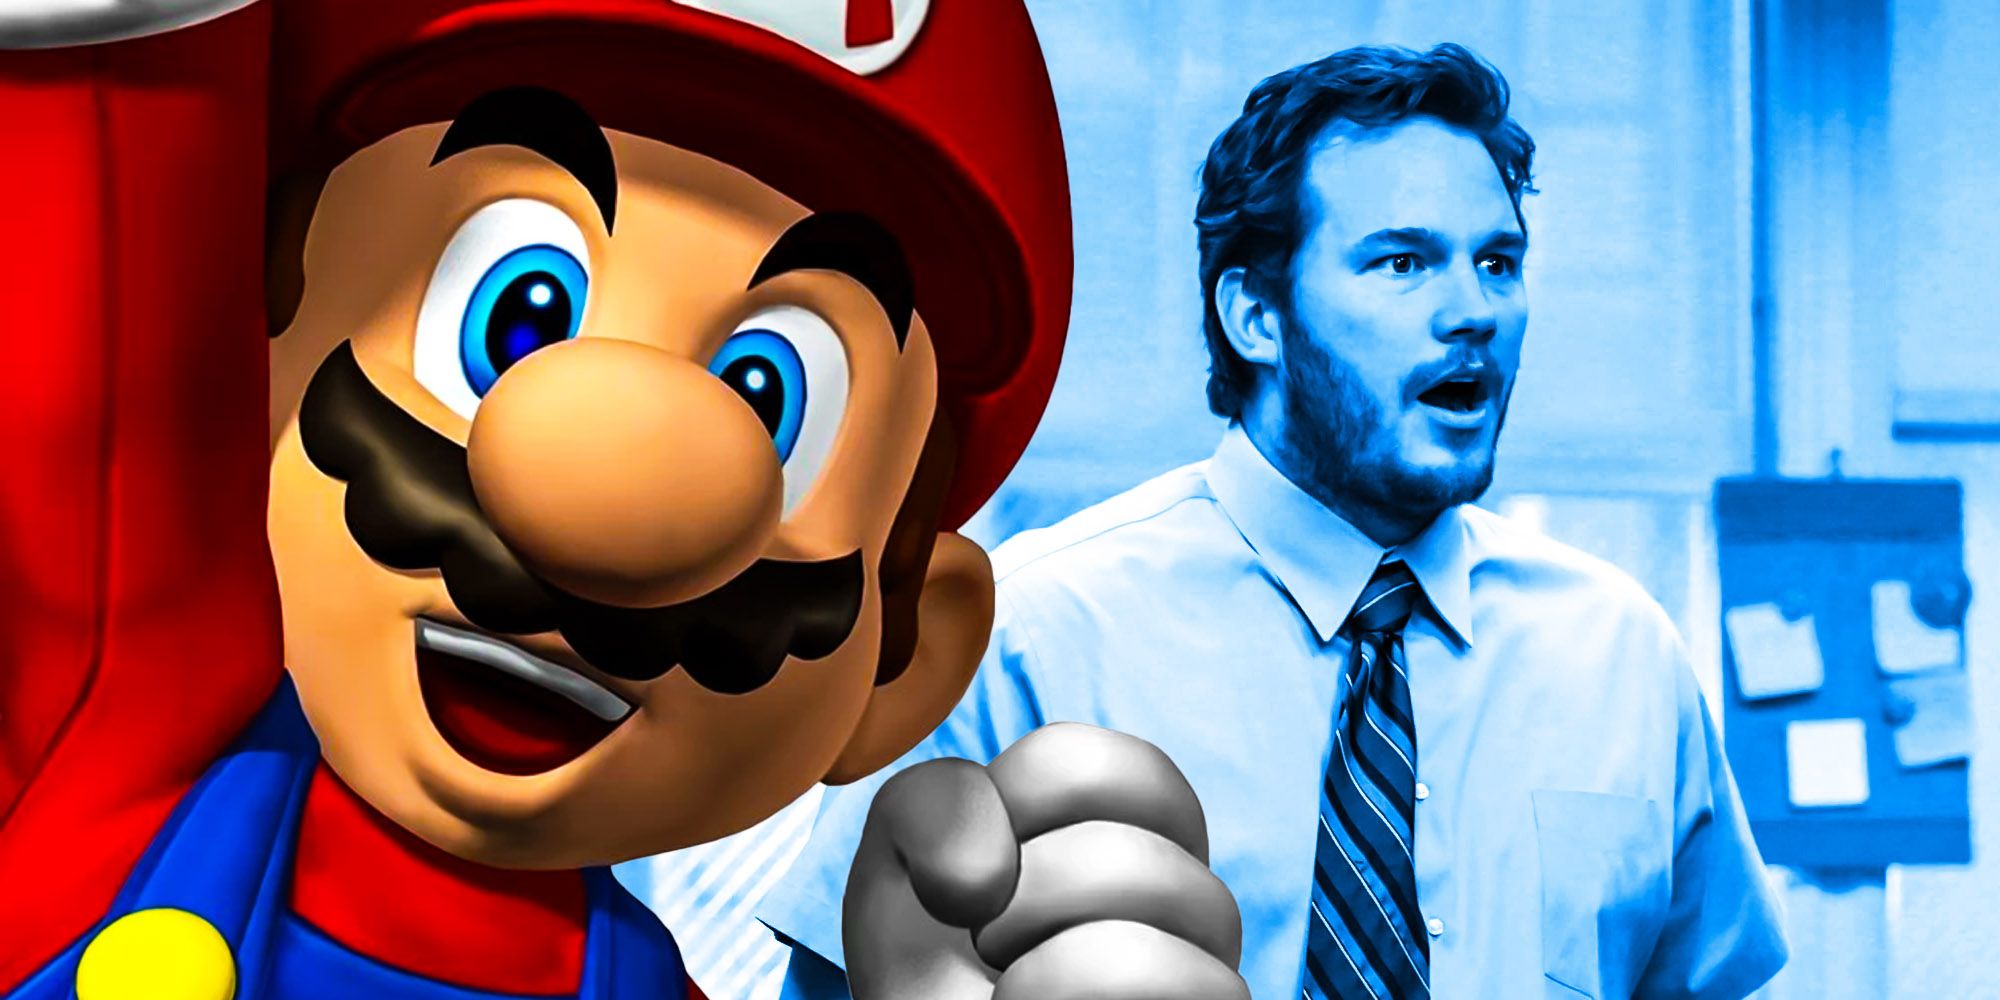 How Chris pratt could work as Mario in the Super mario bros